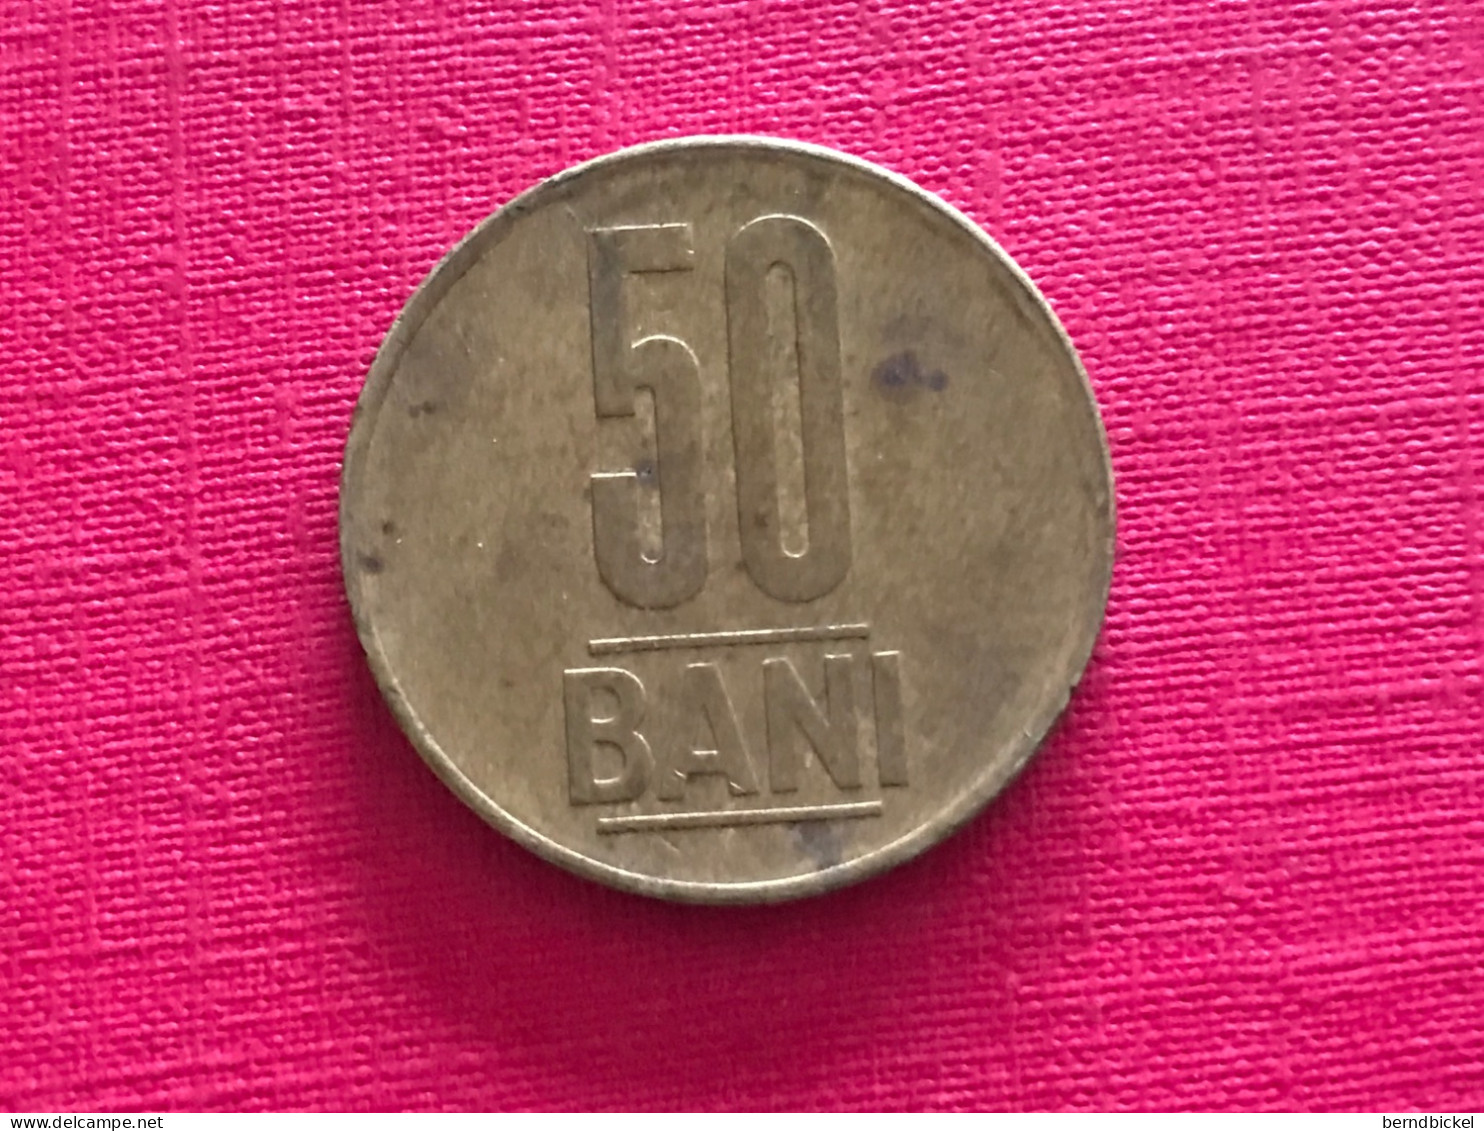 Münze Münzen Umlaufmünze Rumänien 50 Bani 2017 - Rumänien